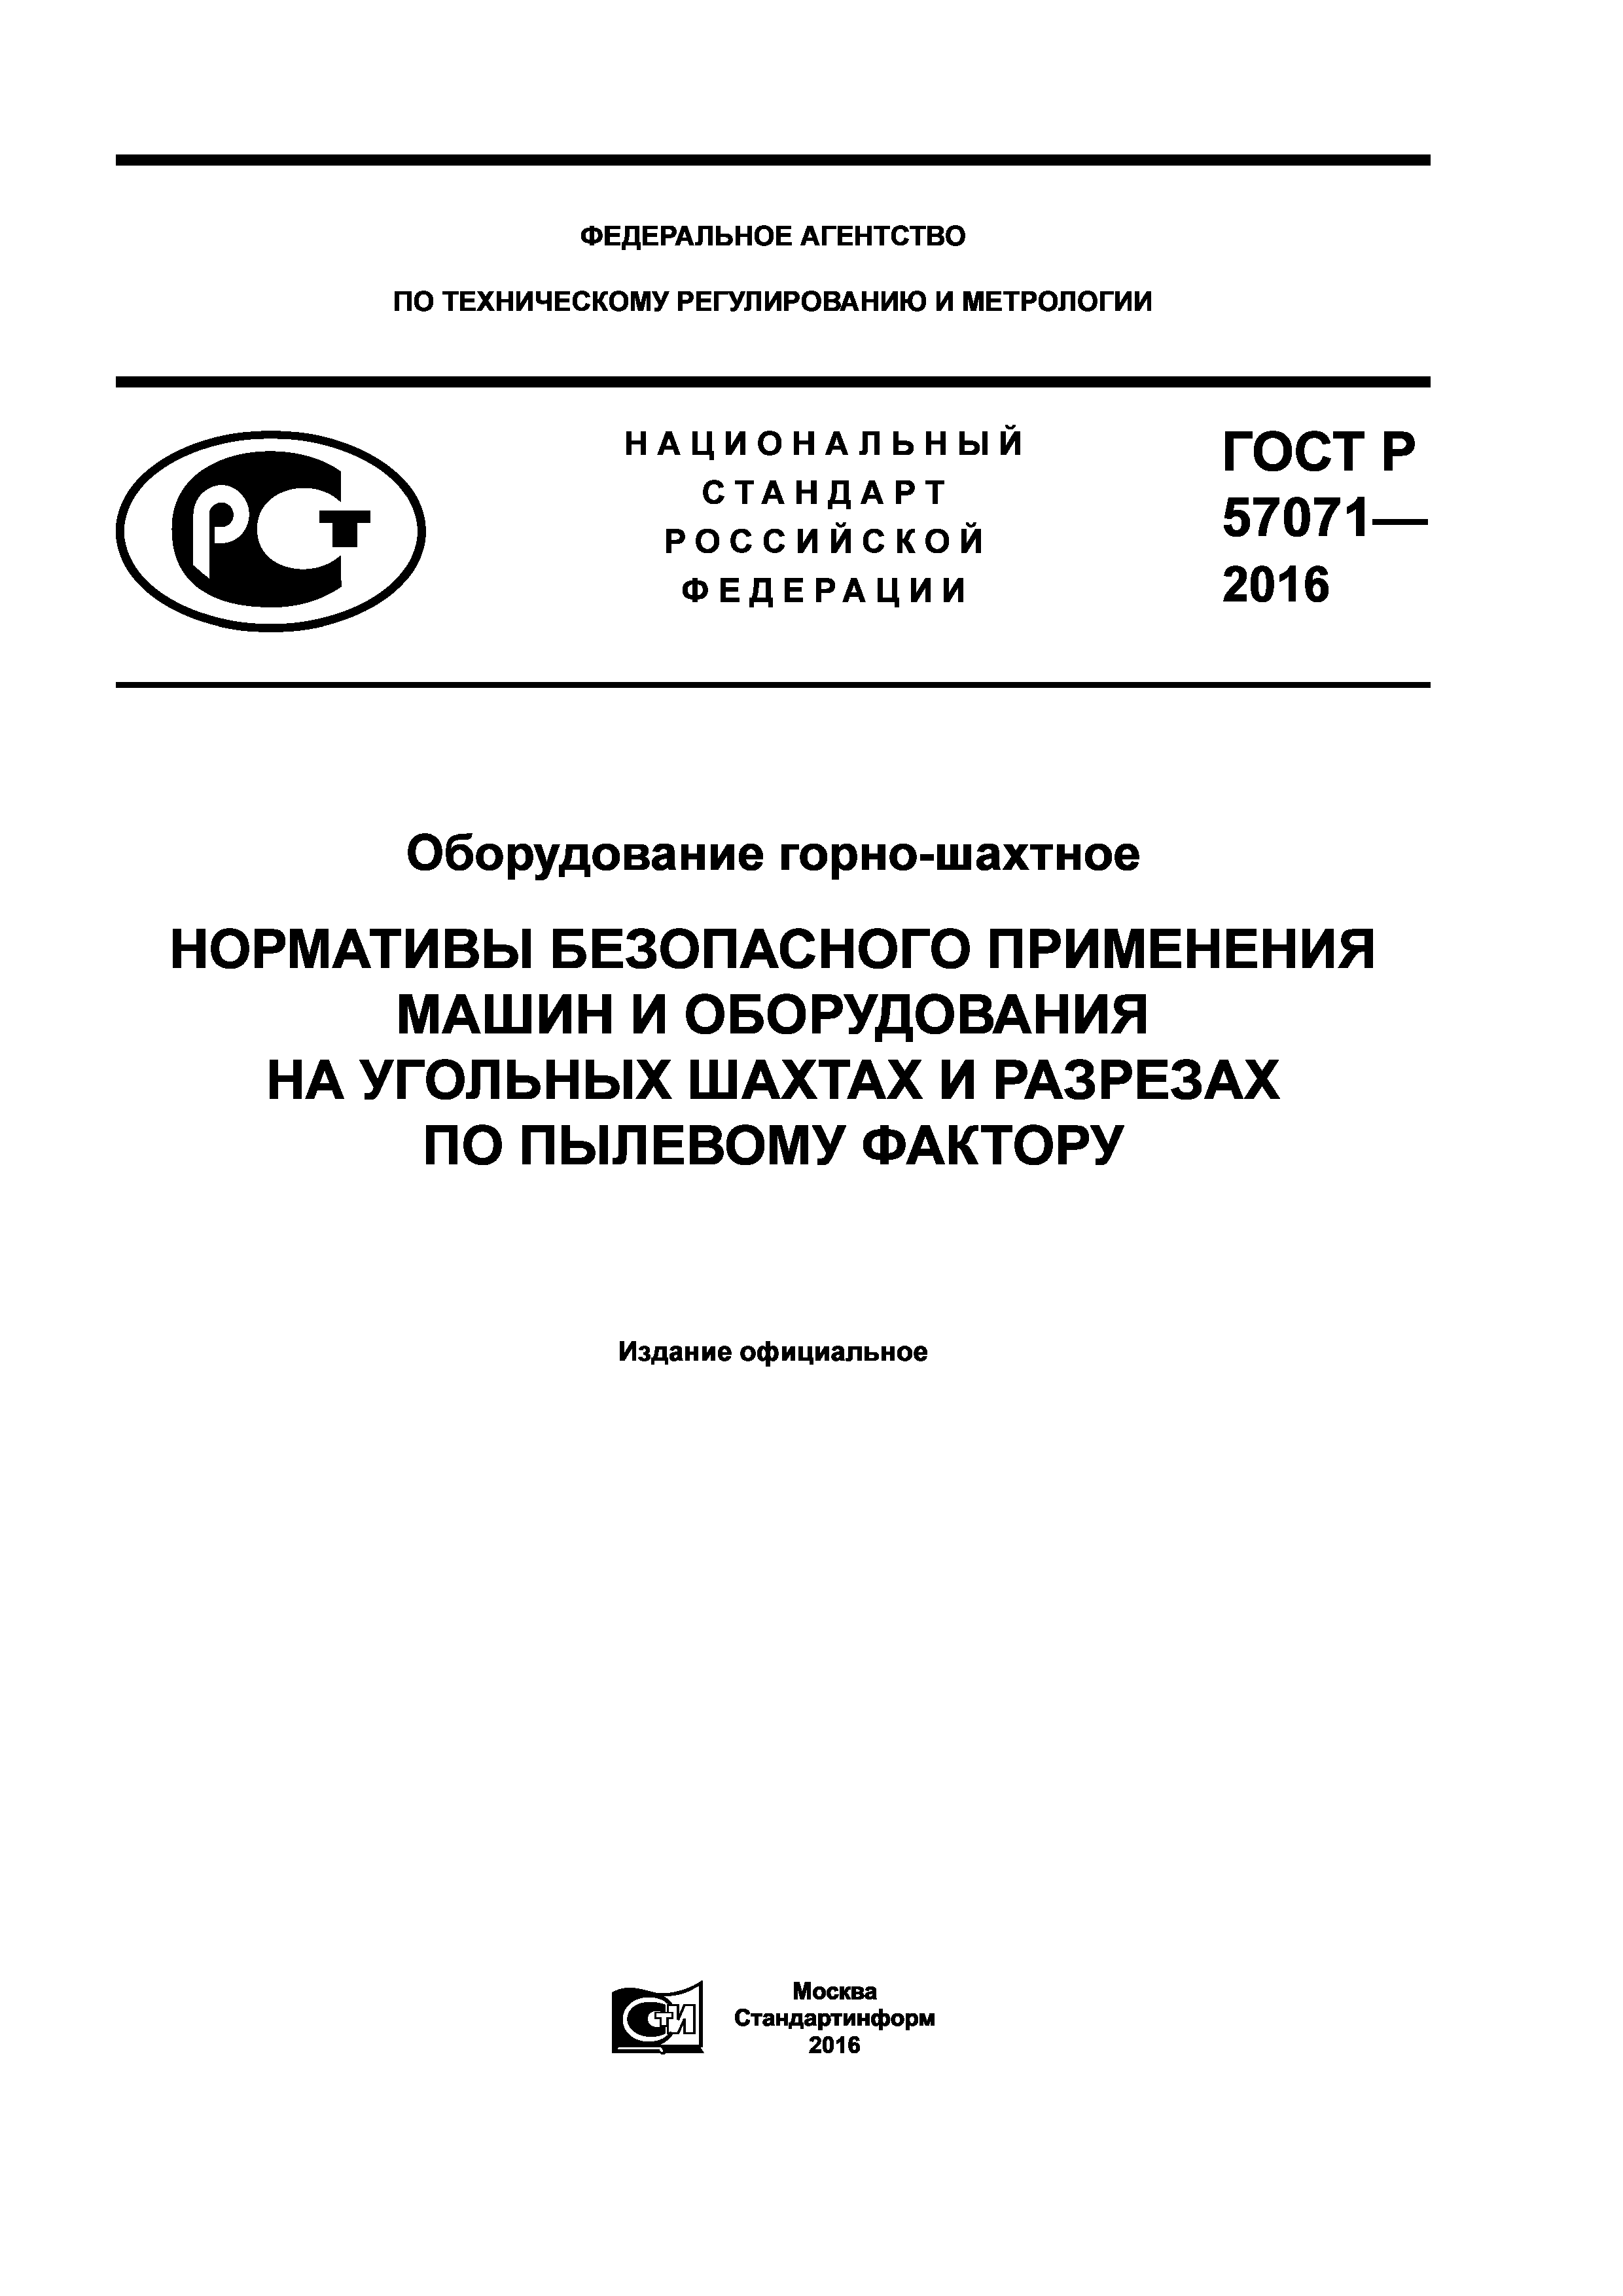 ГОСТ Р 57071-2016